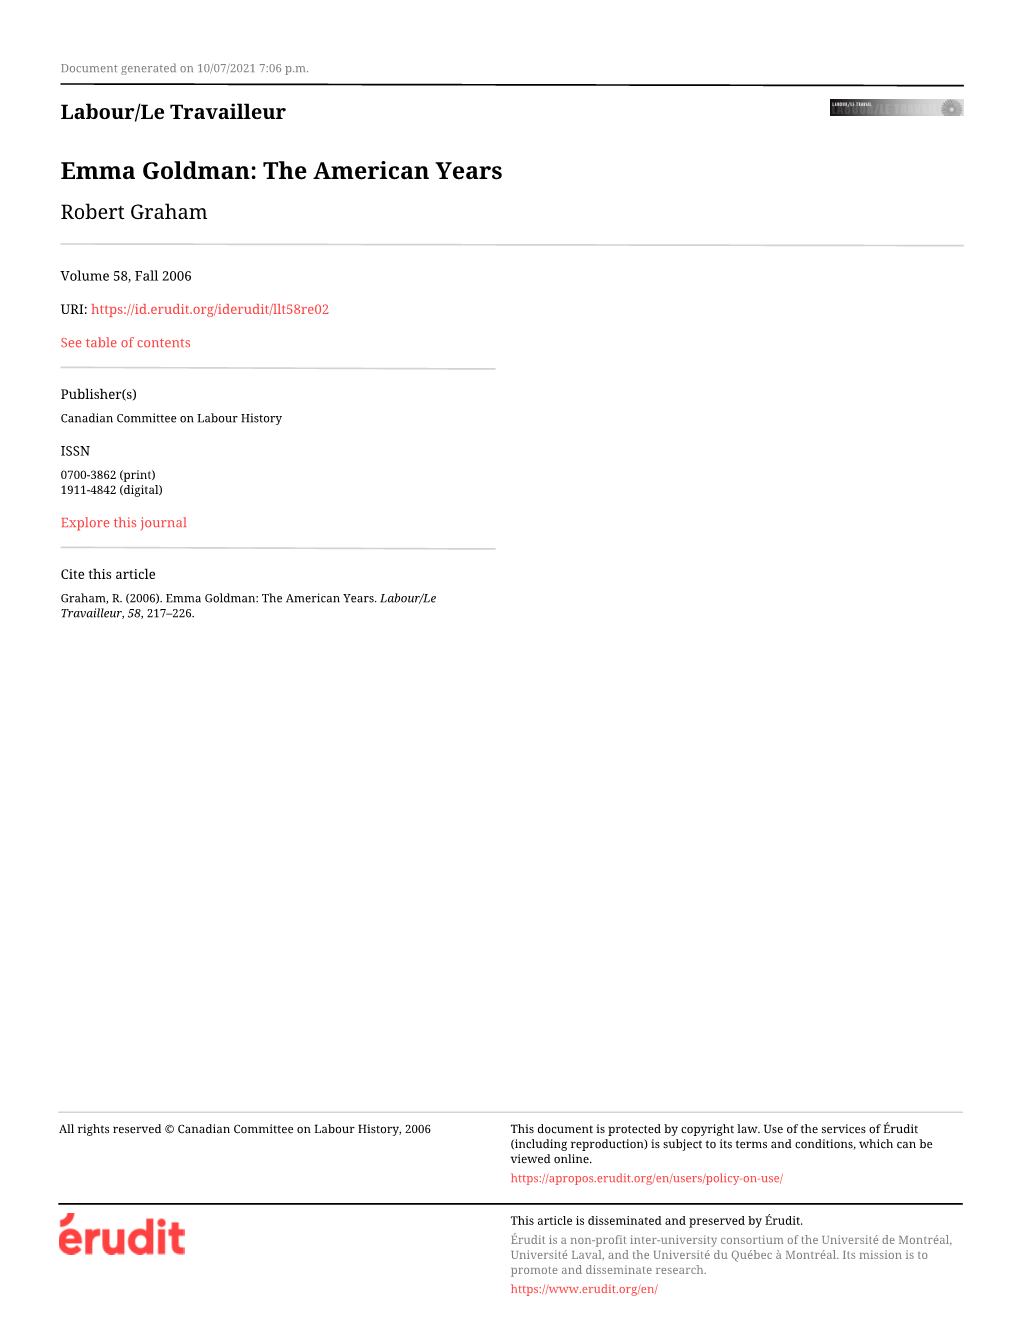 Emma Goldman: the American Years Robert Graham